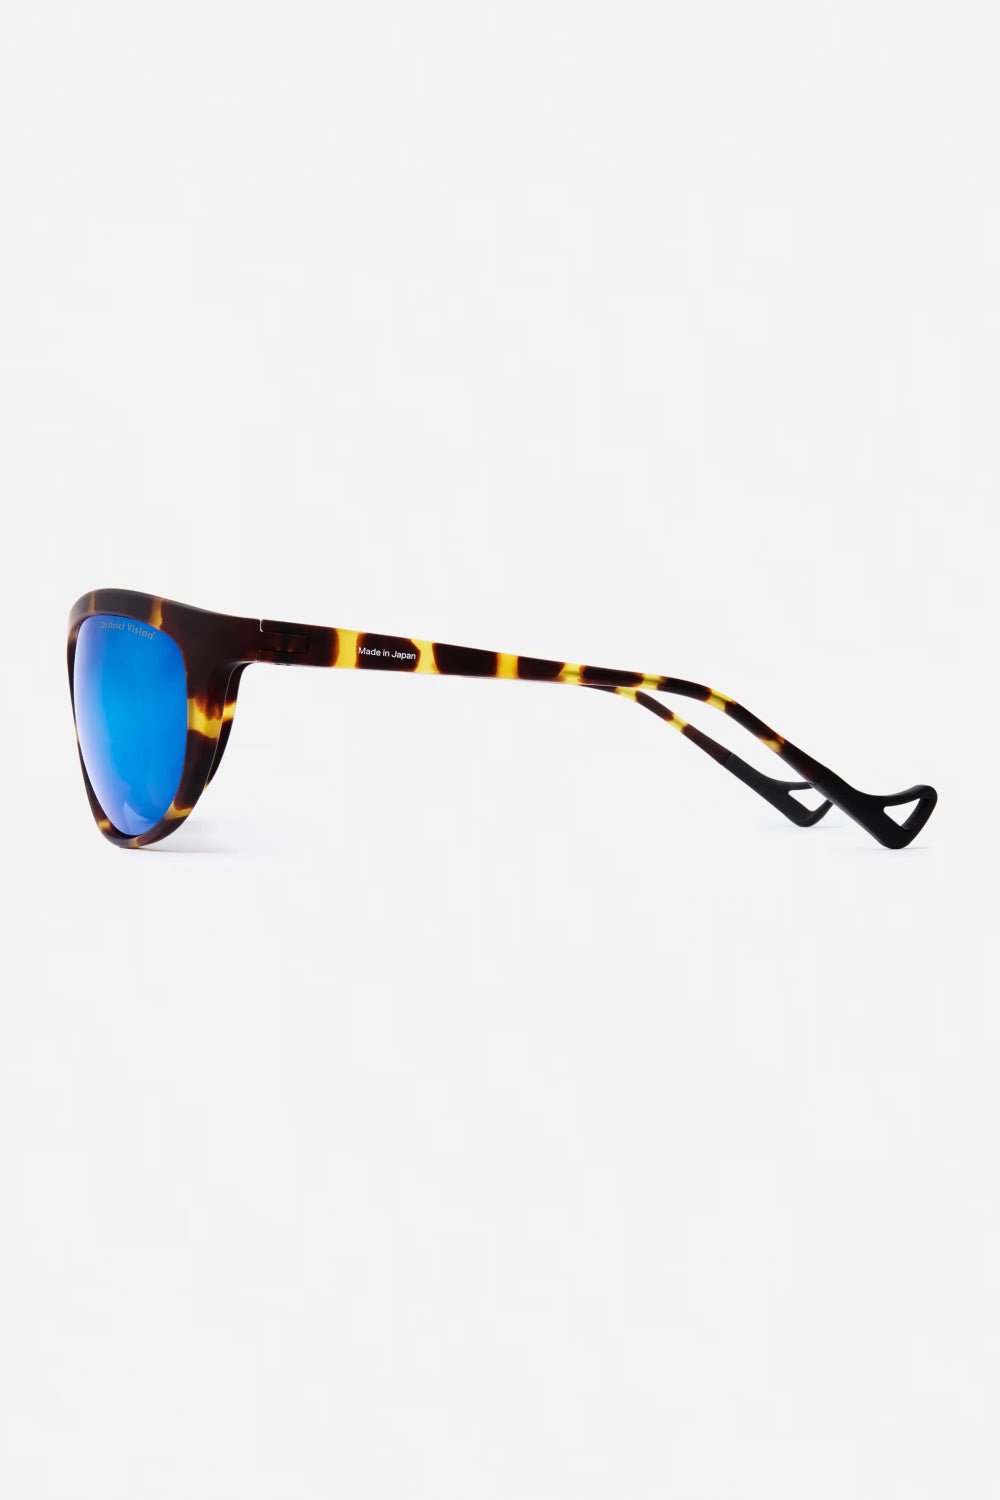 District Vision Takeyoshi Altitude Master Sunglasses - Tortoise/D+ Blue Mirror | Coffee Outdoors